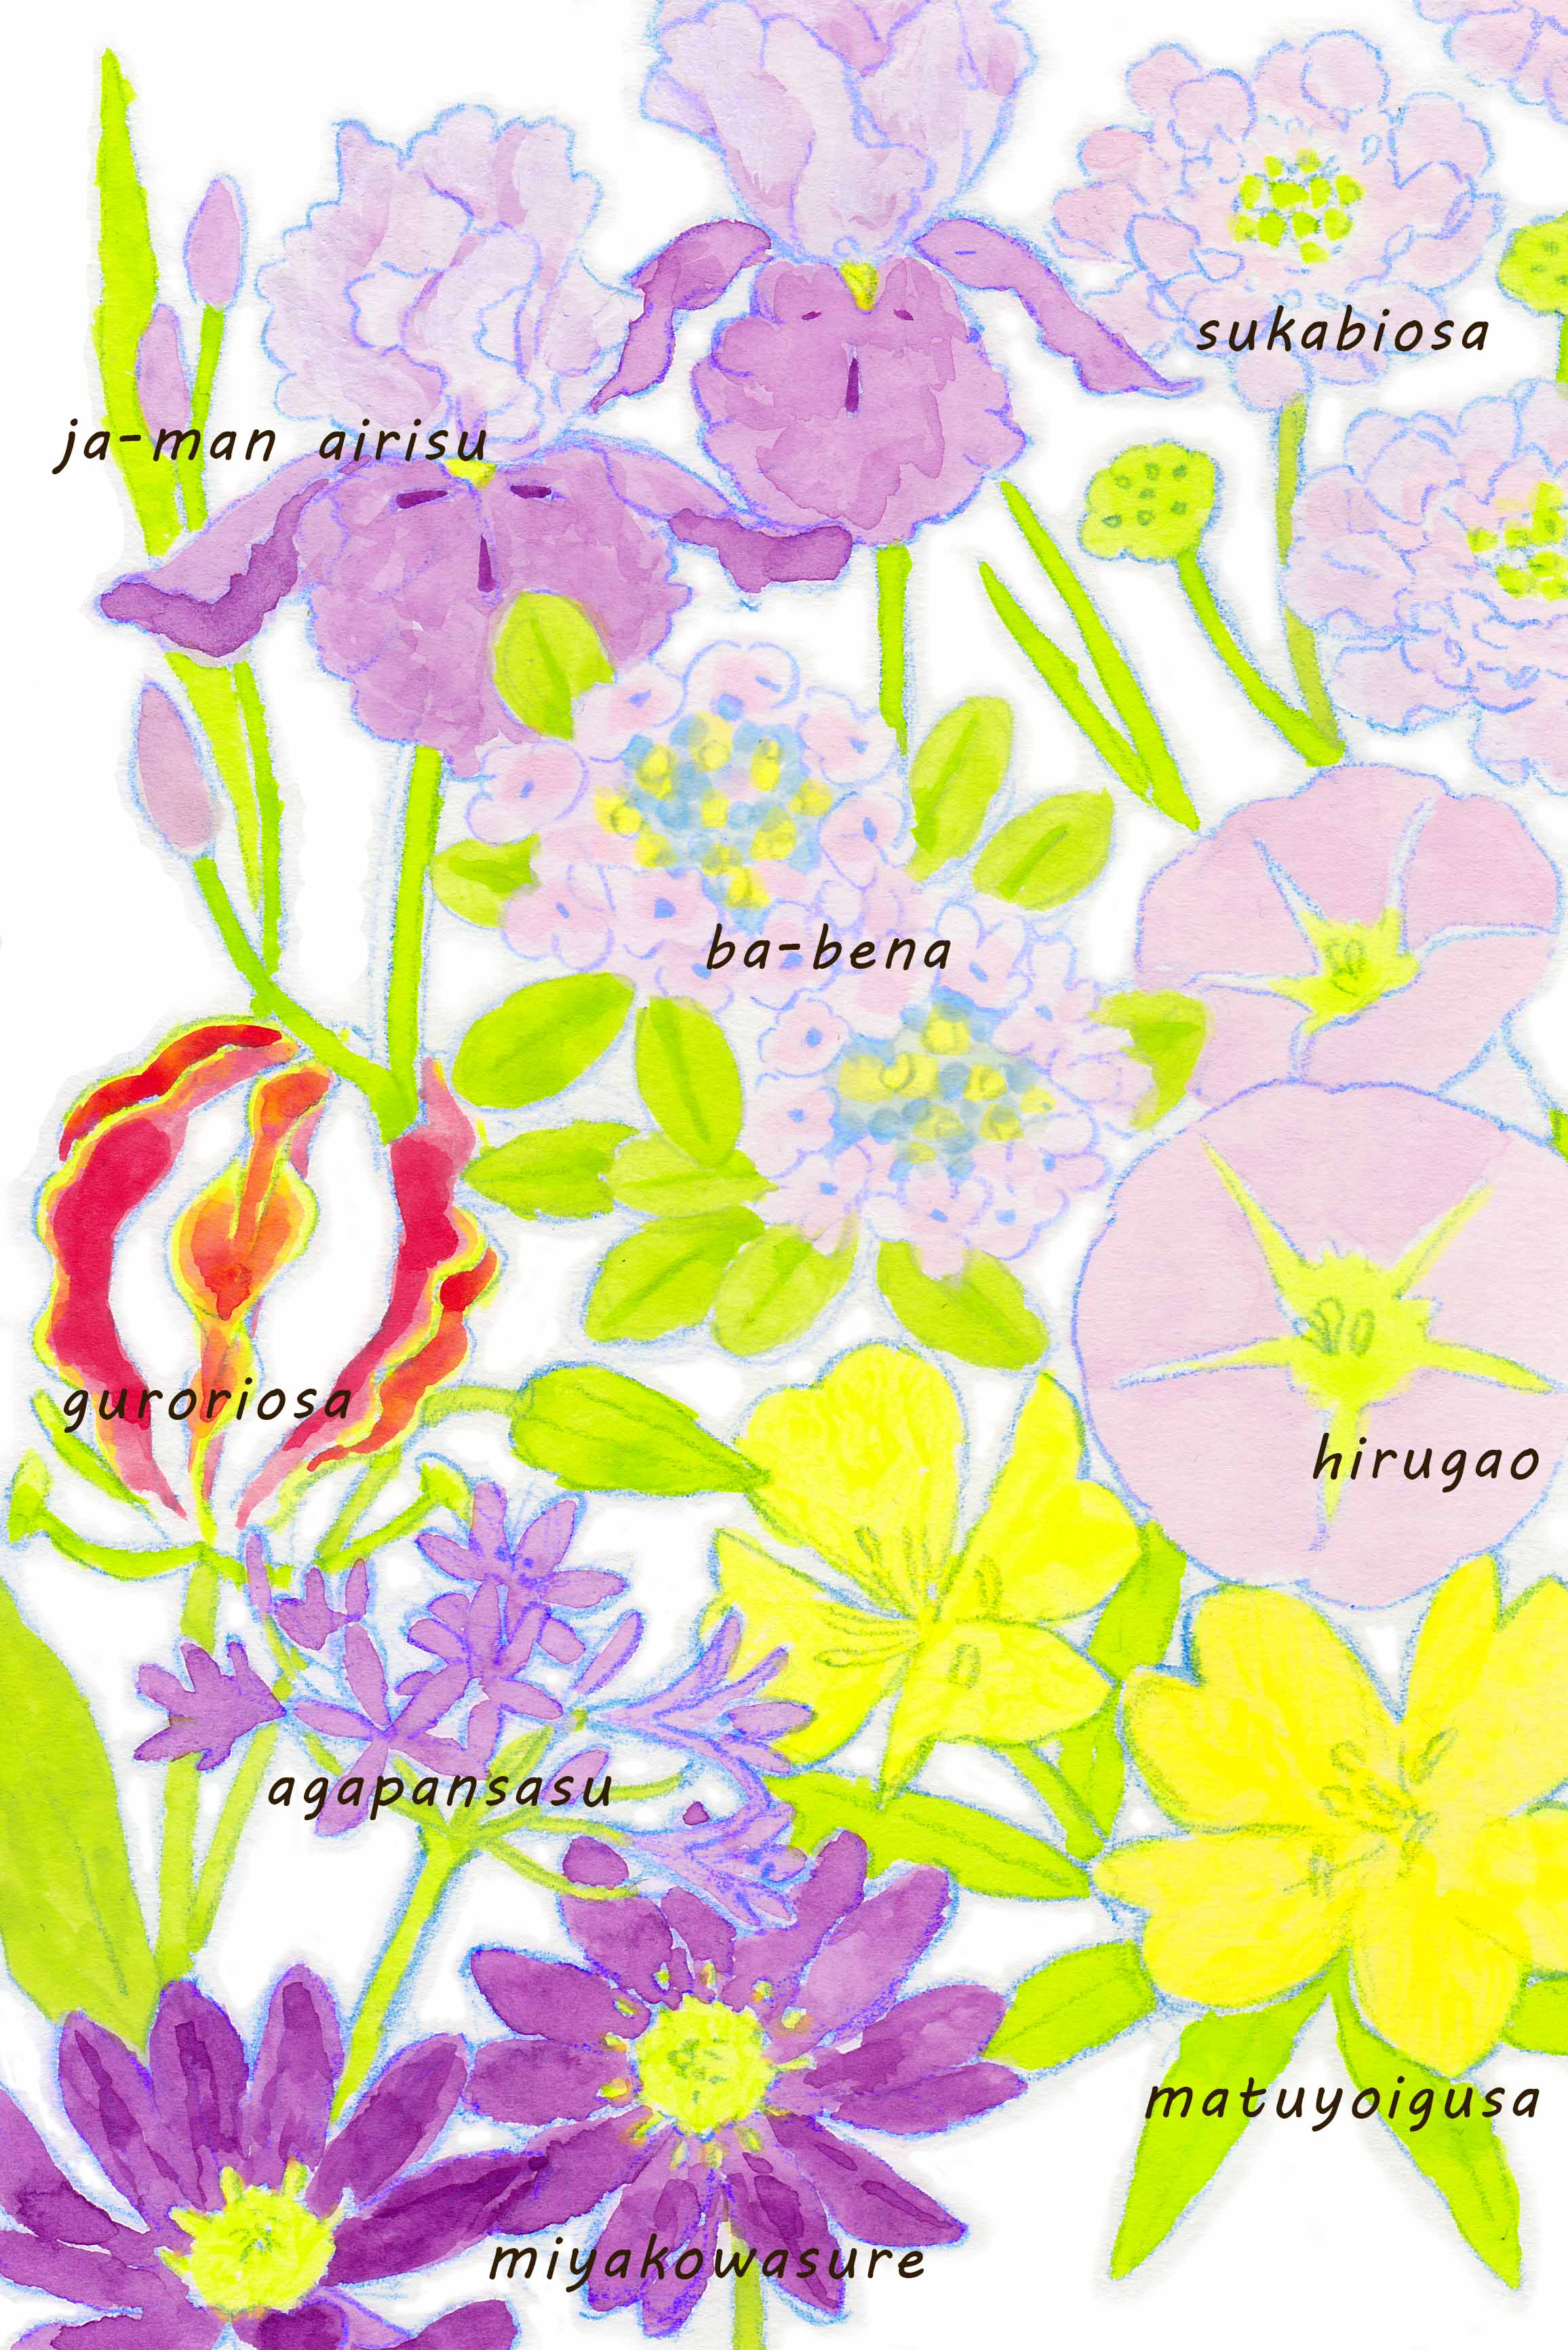 ｍｍｎｏｏｏ 花いっぱいのイラスト できました イラスト アナログイラスト ６月の誕生花 もう7月だけど 色鉛筆画 花のイラスト T Co E9fef0p8tf Twitter